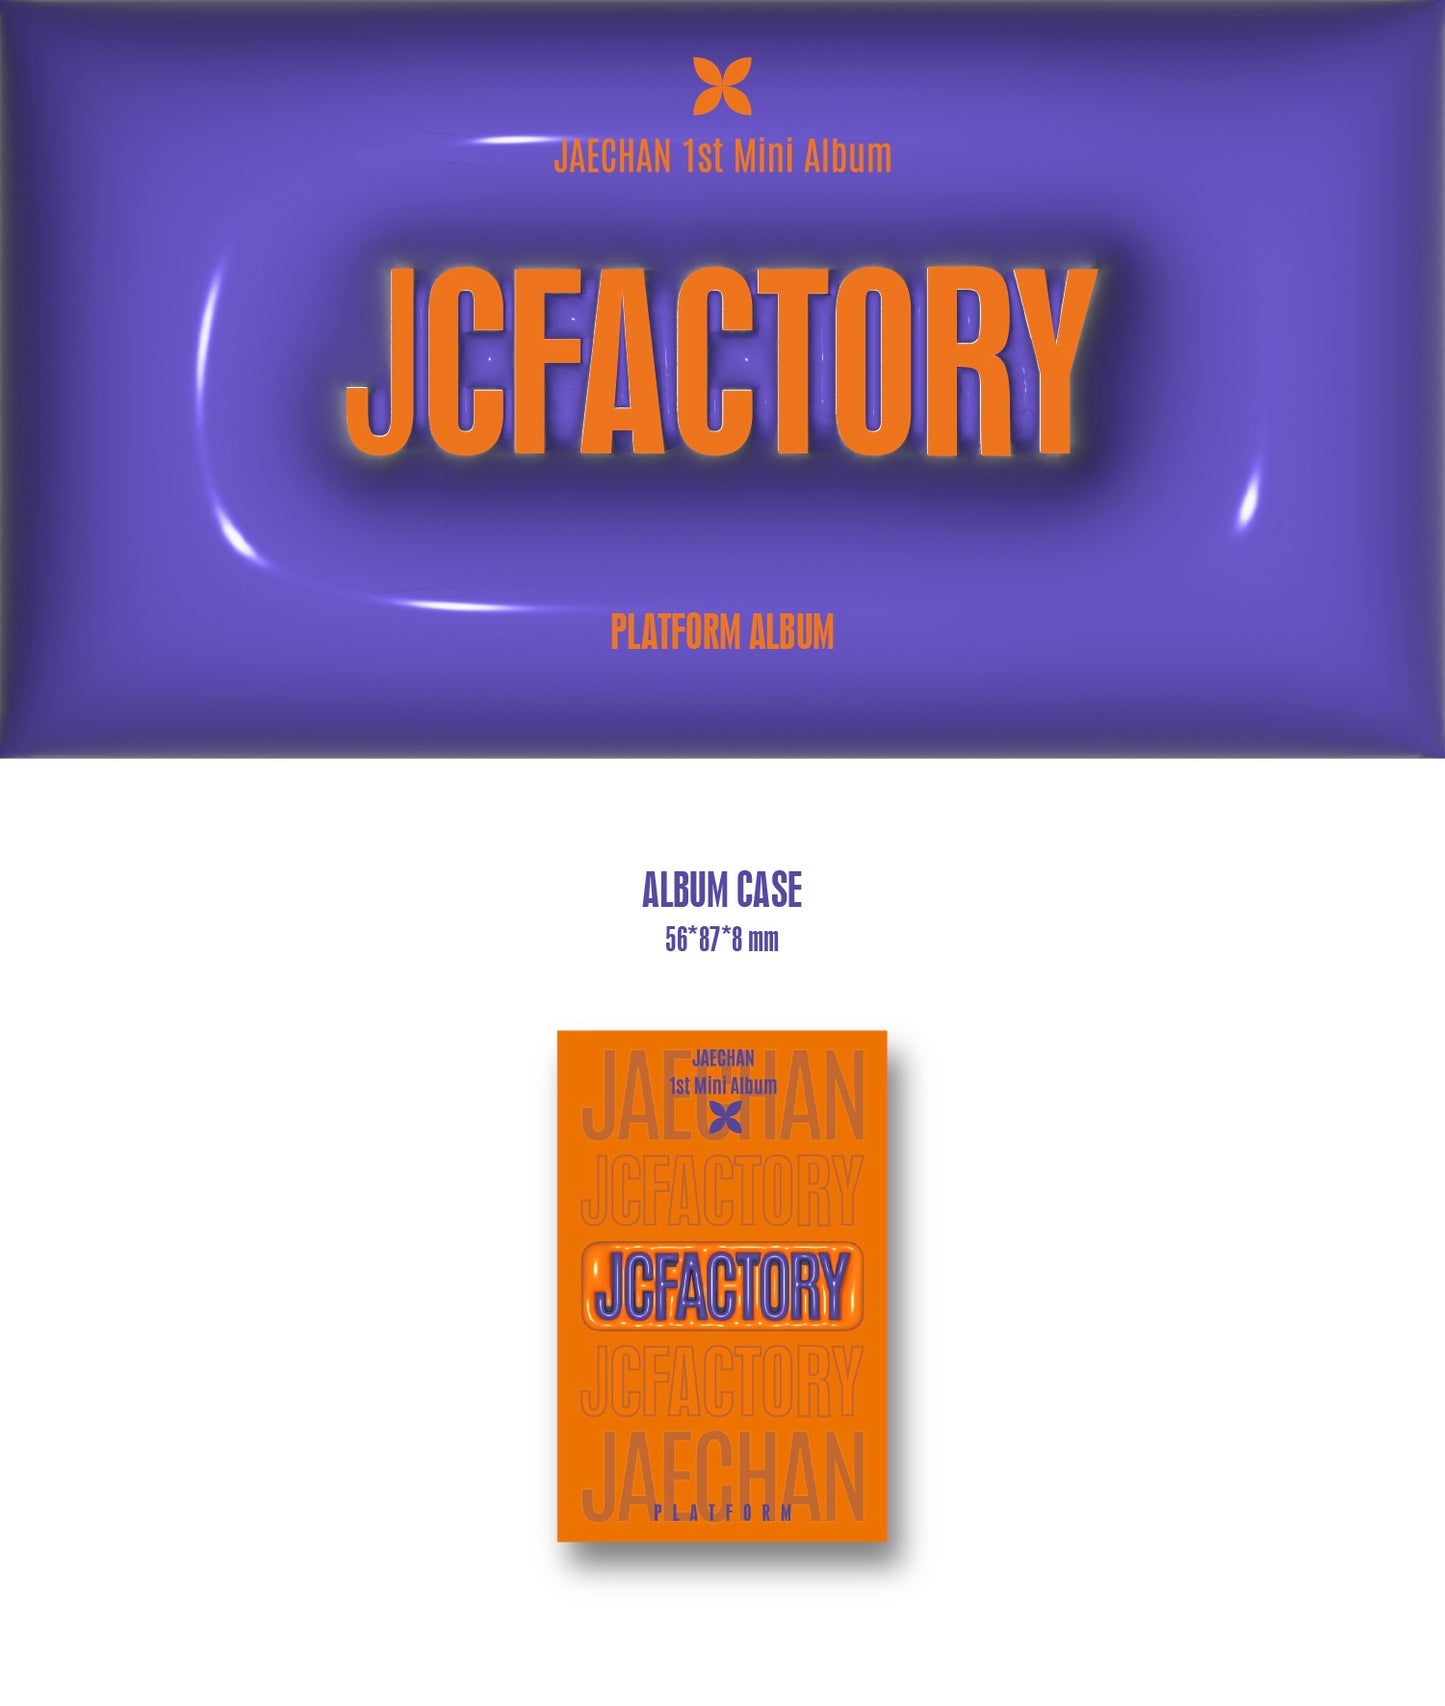 Jaechan - JCFACTORY